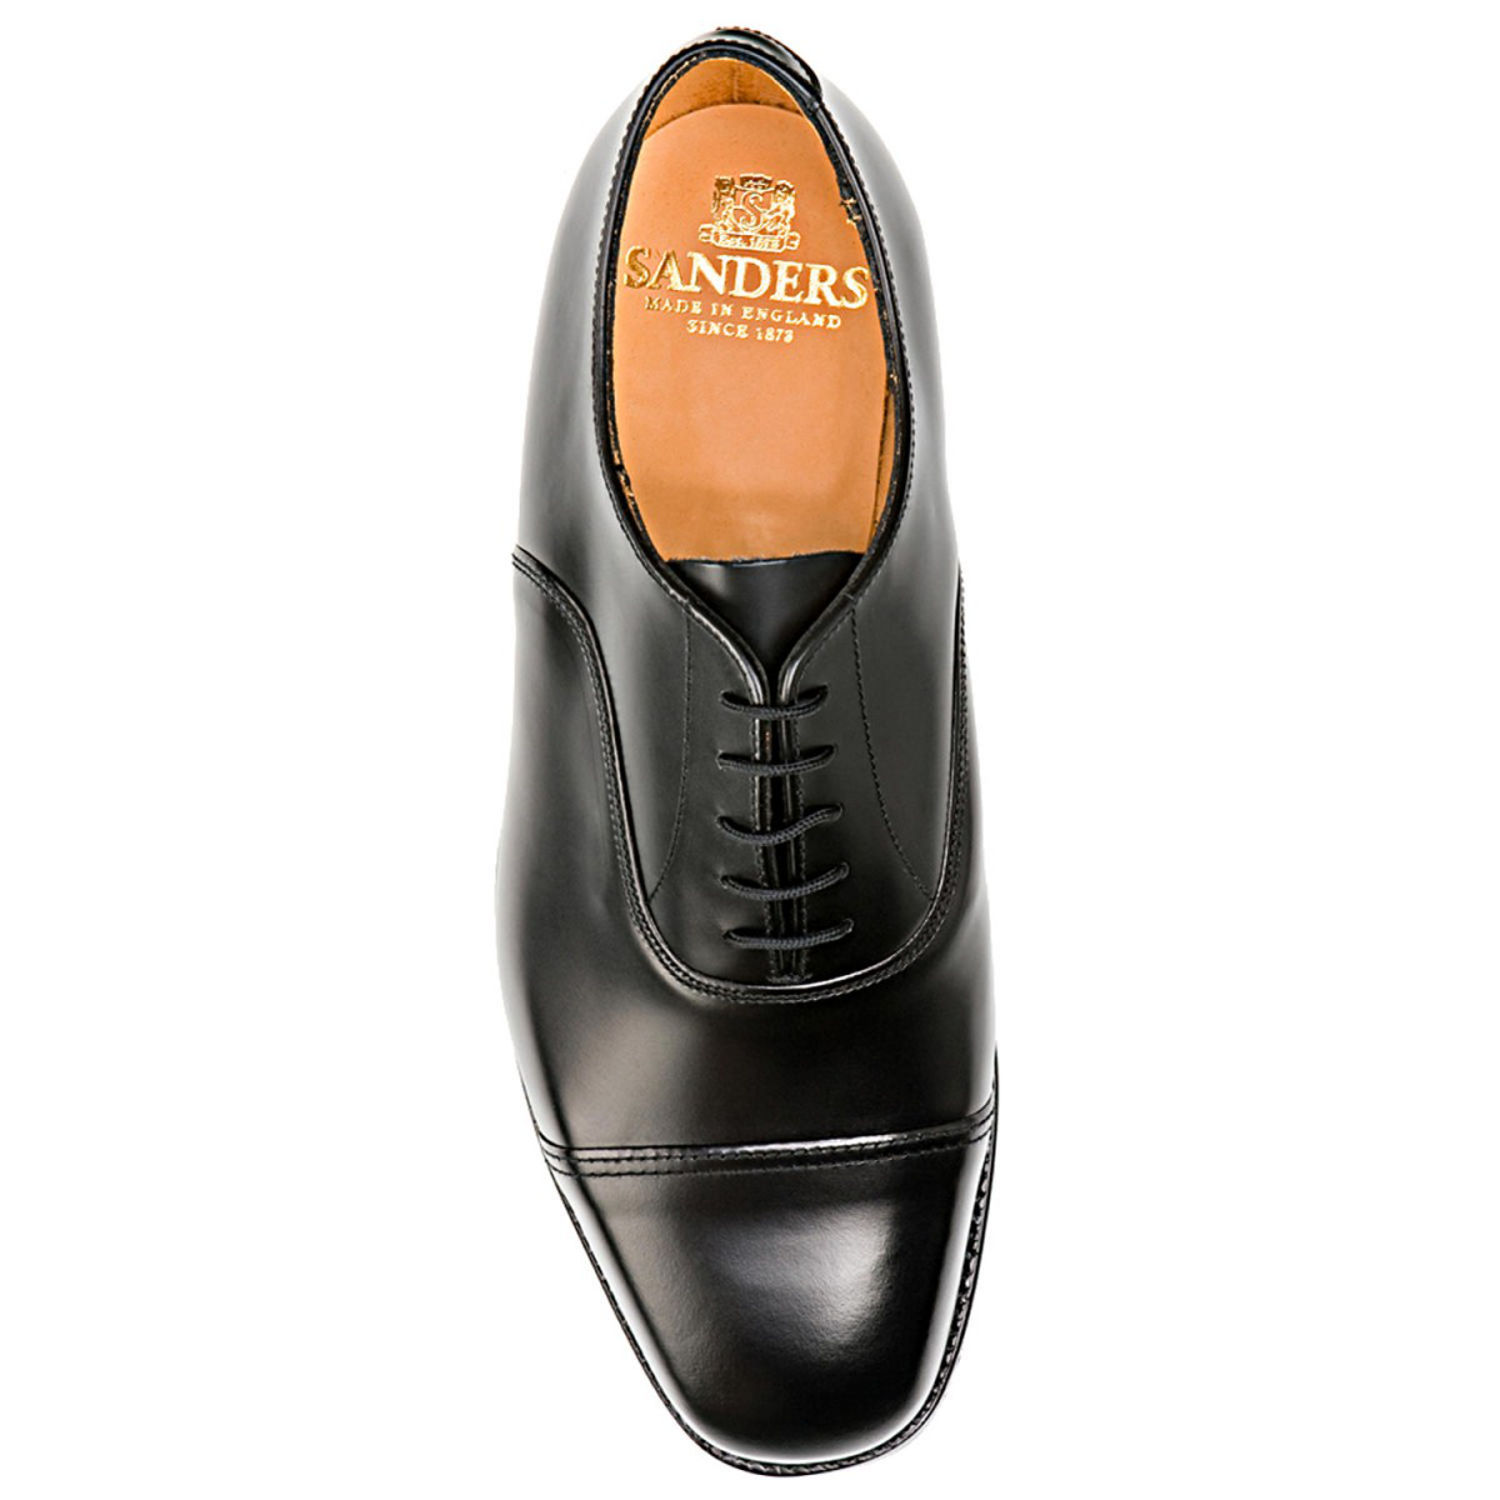 Sanders oxford shoes パンチドキャップ/ブラック